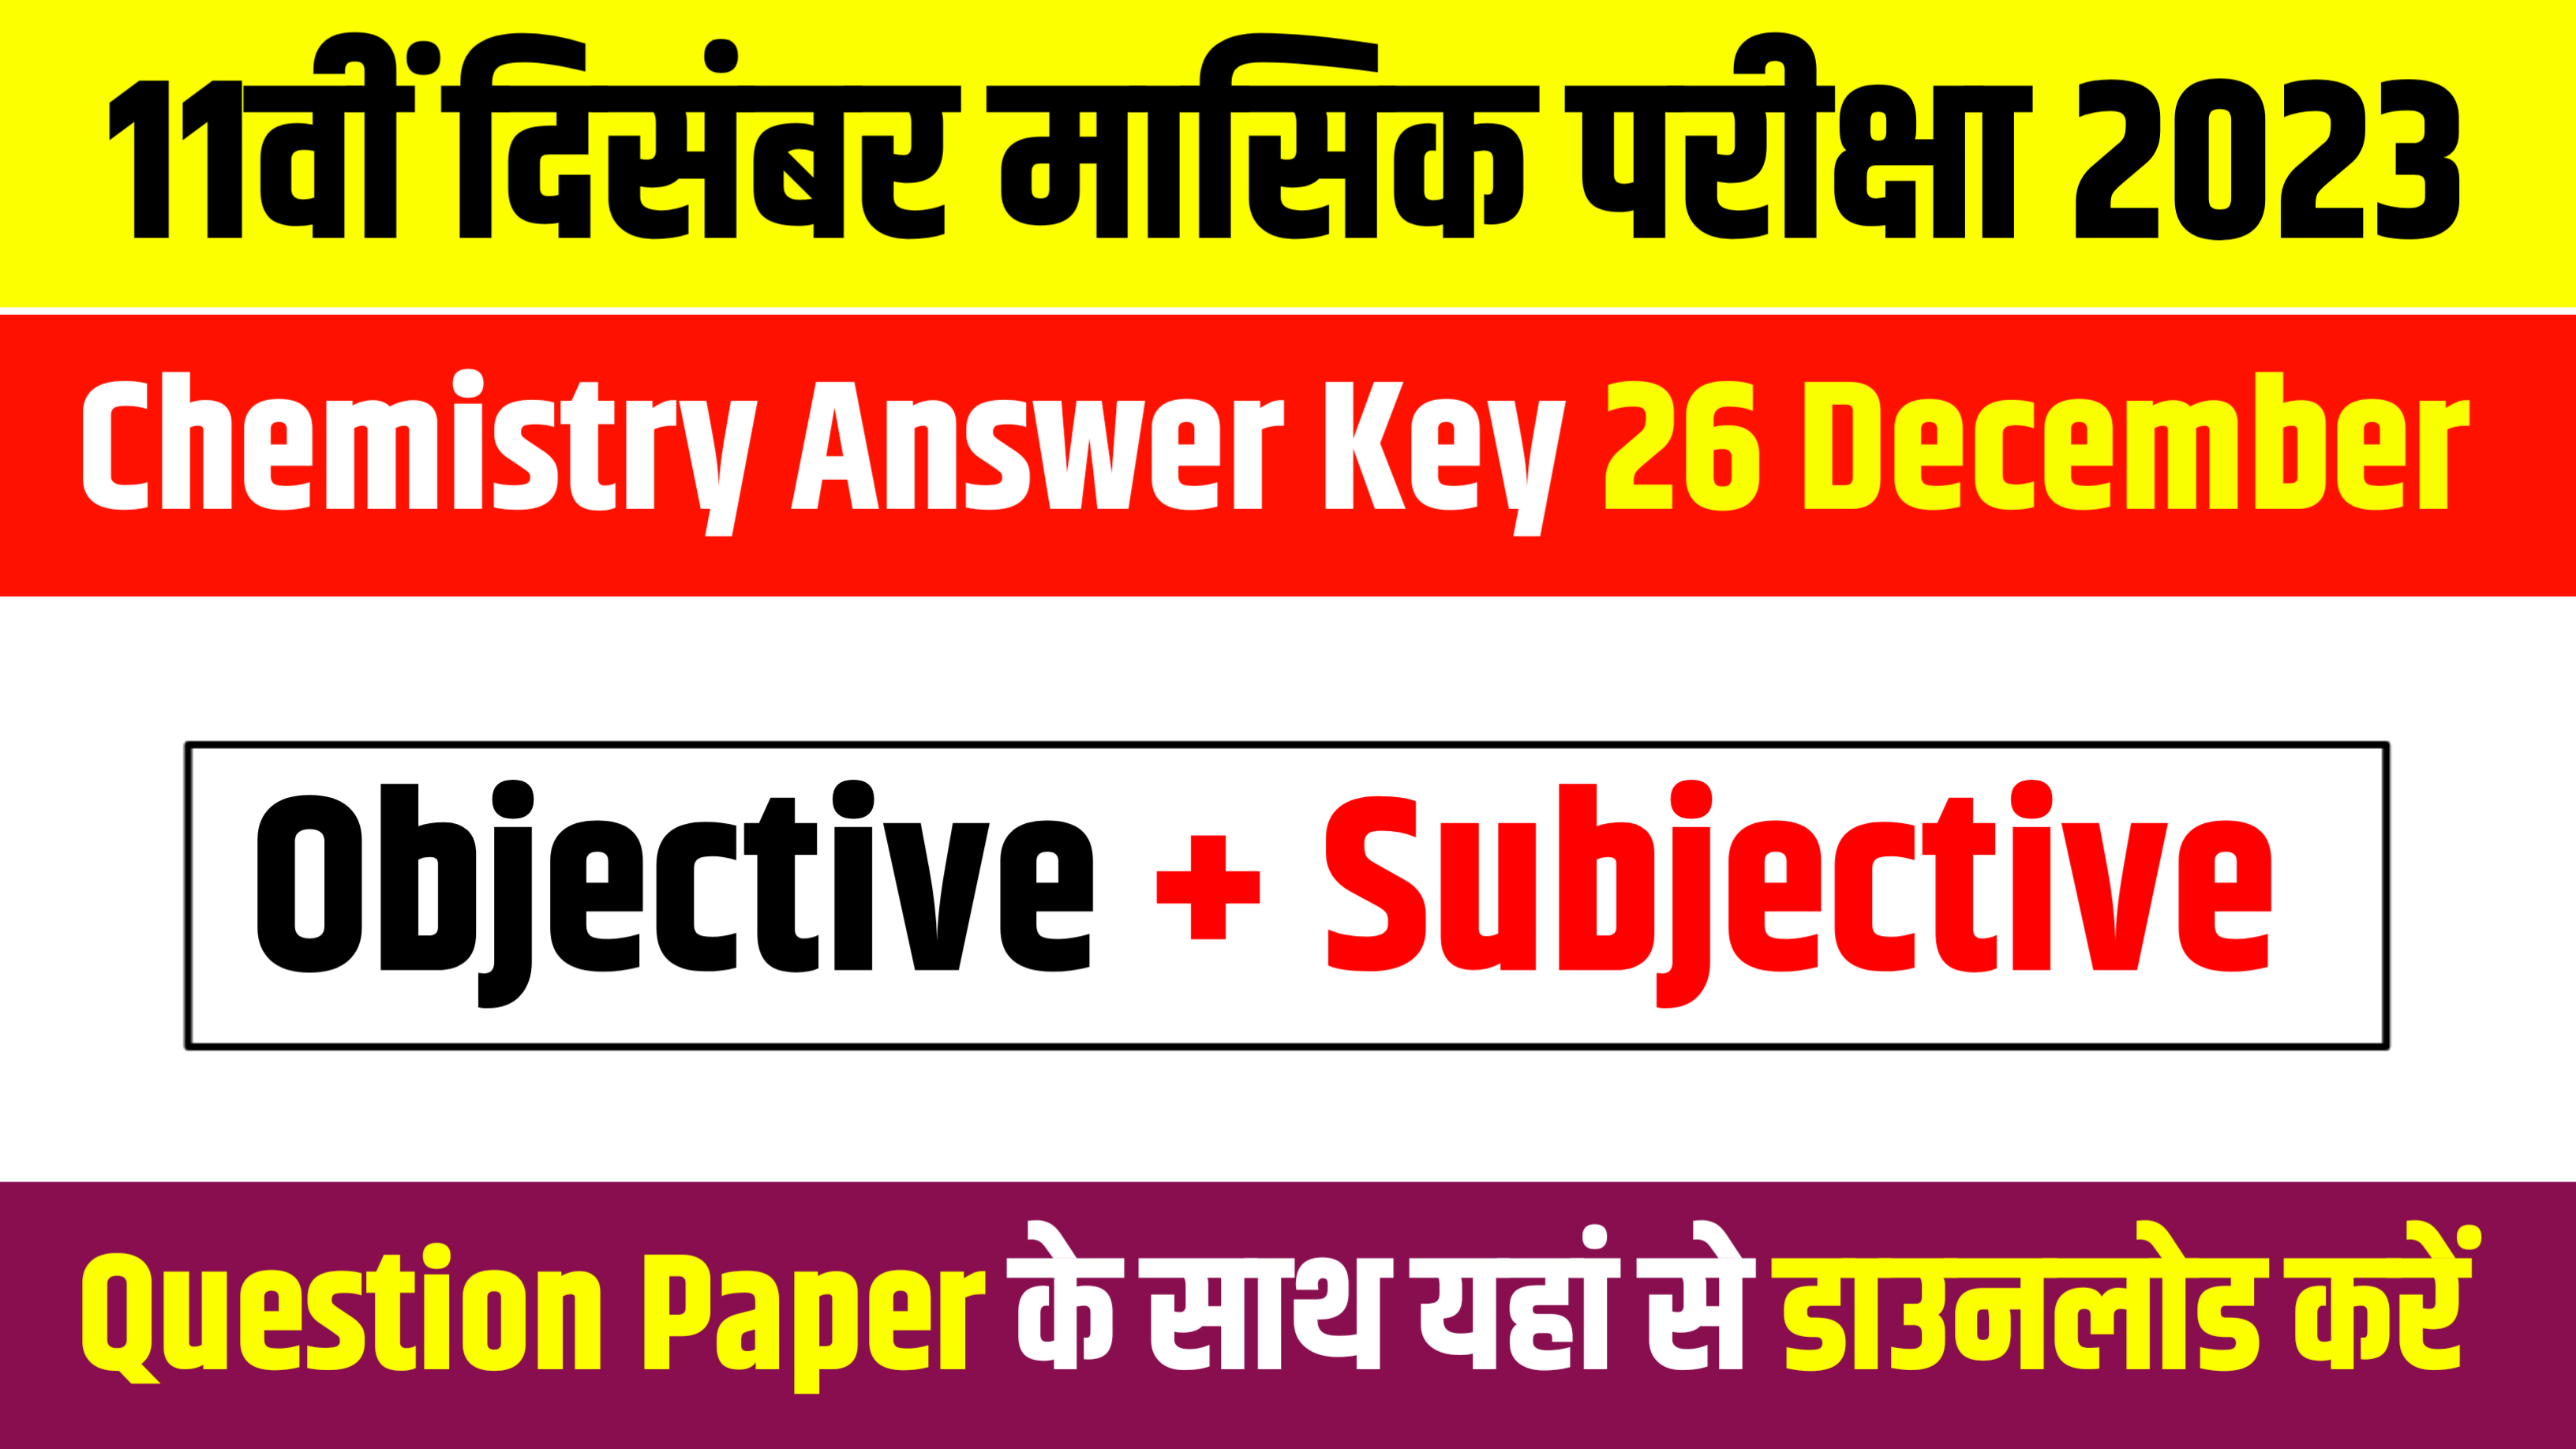 Bihar Board 11th Chemistry Monthly Exam 2023: